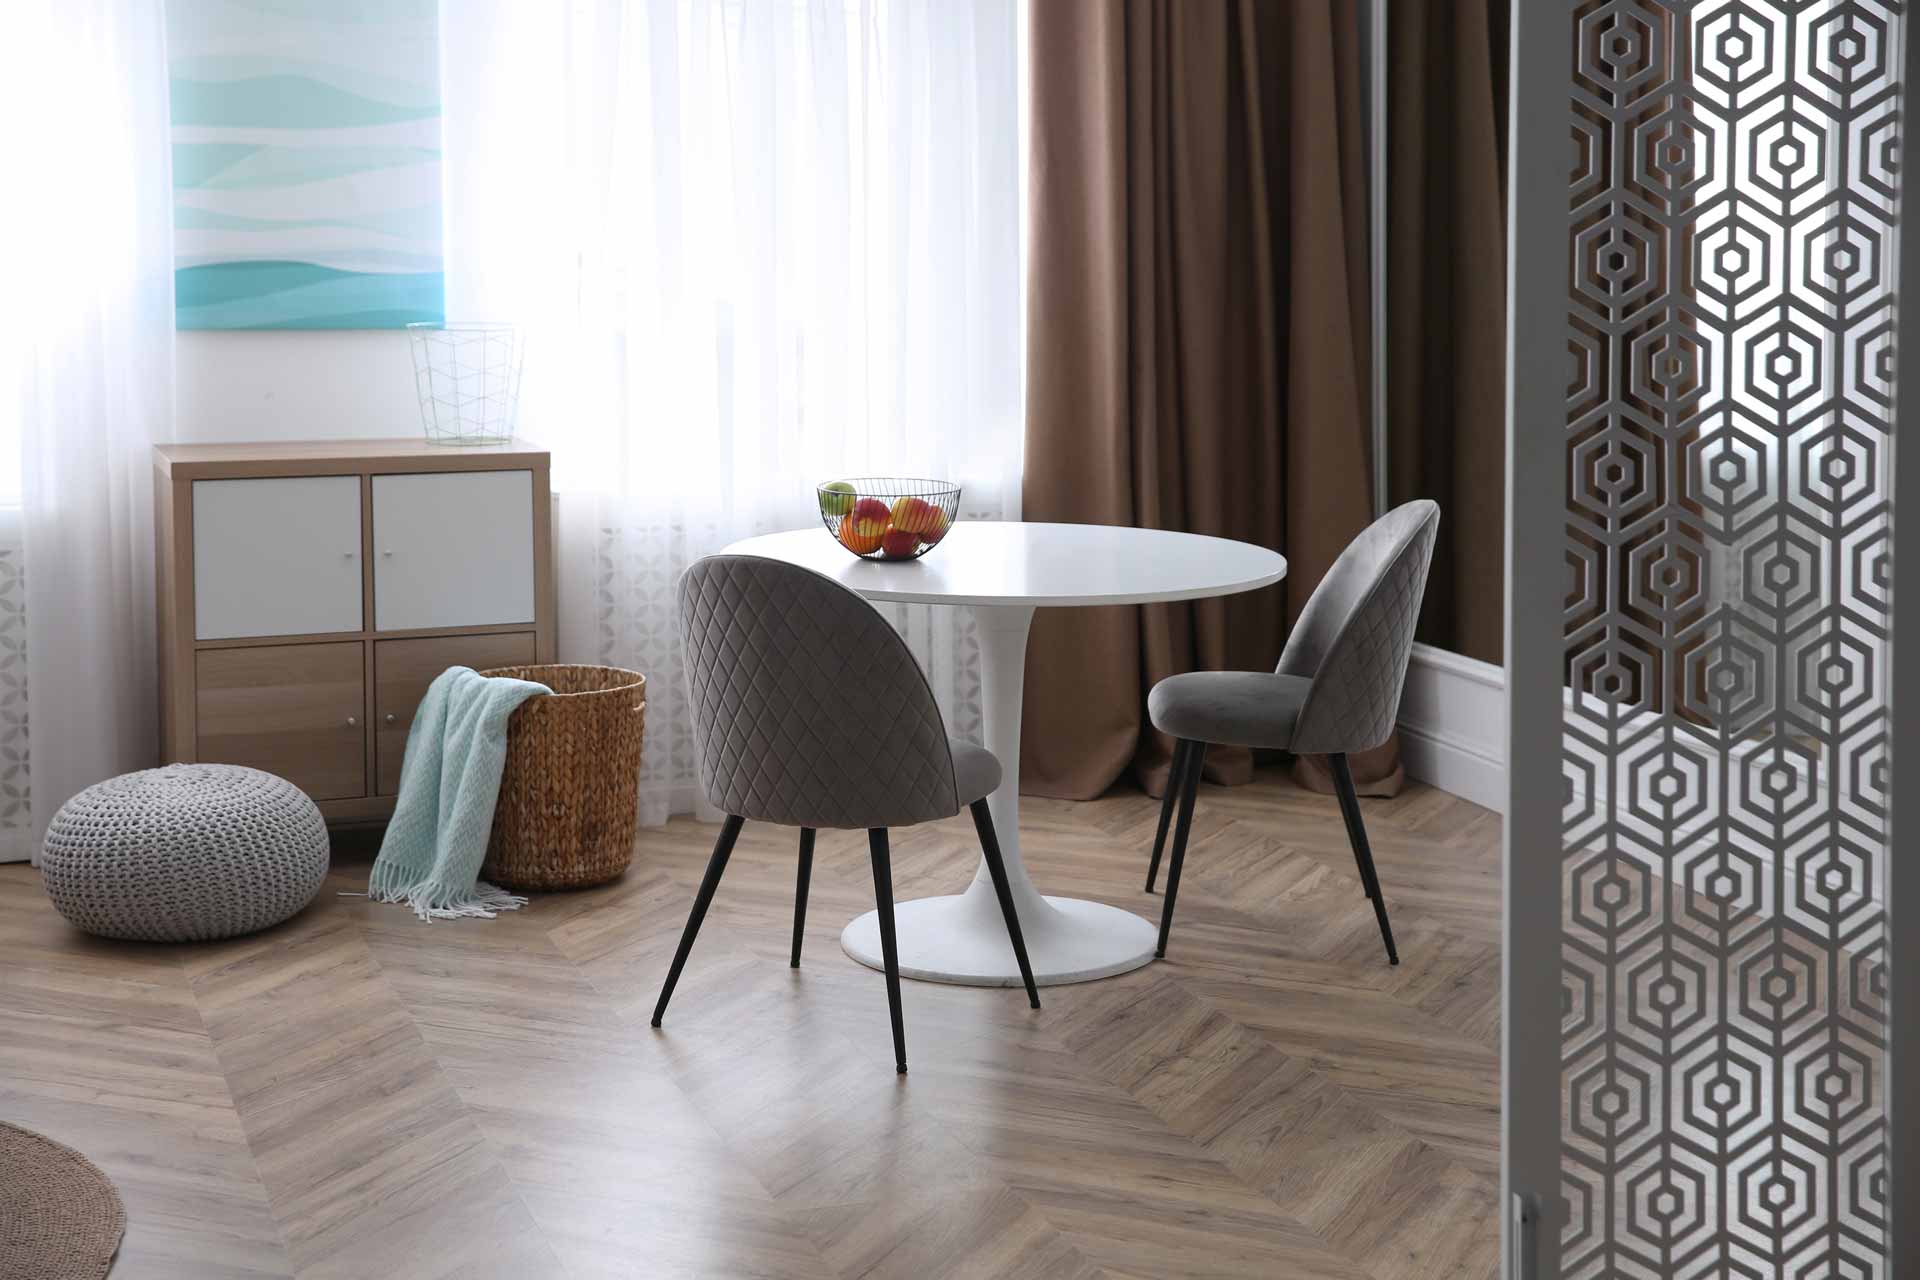 Small dining room with linoleum flooring